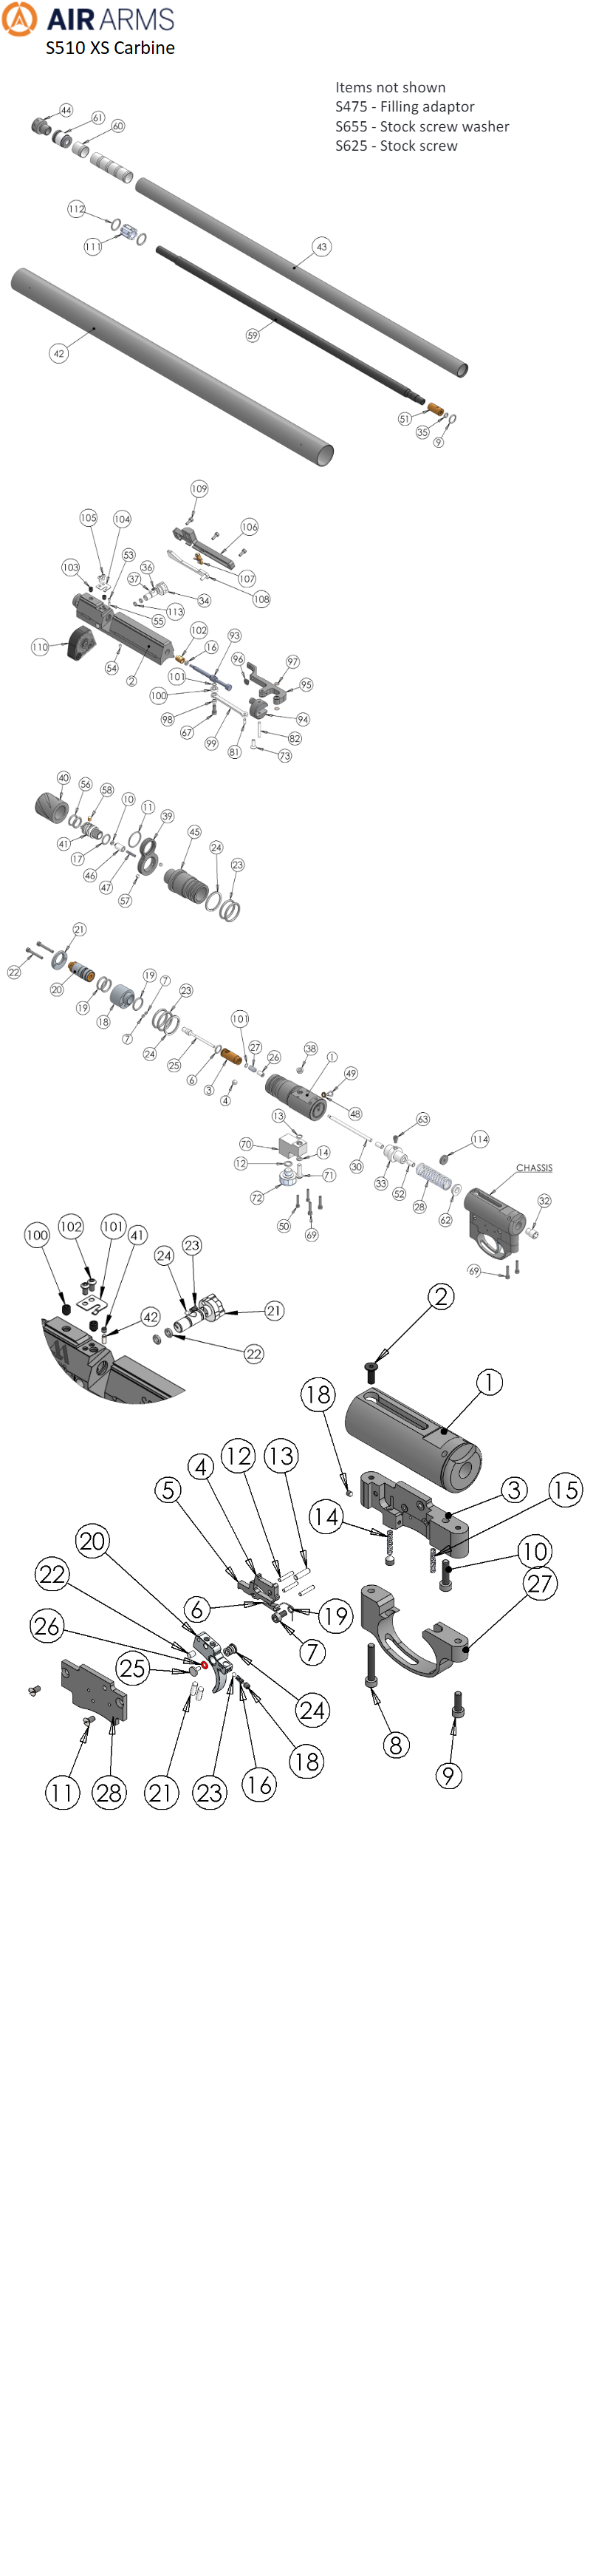 model schematic